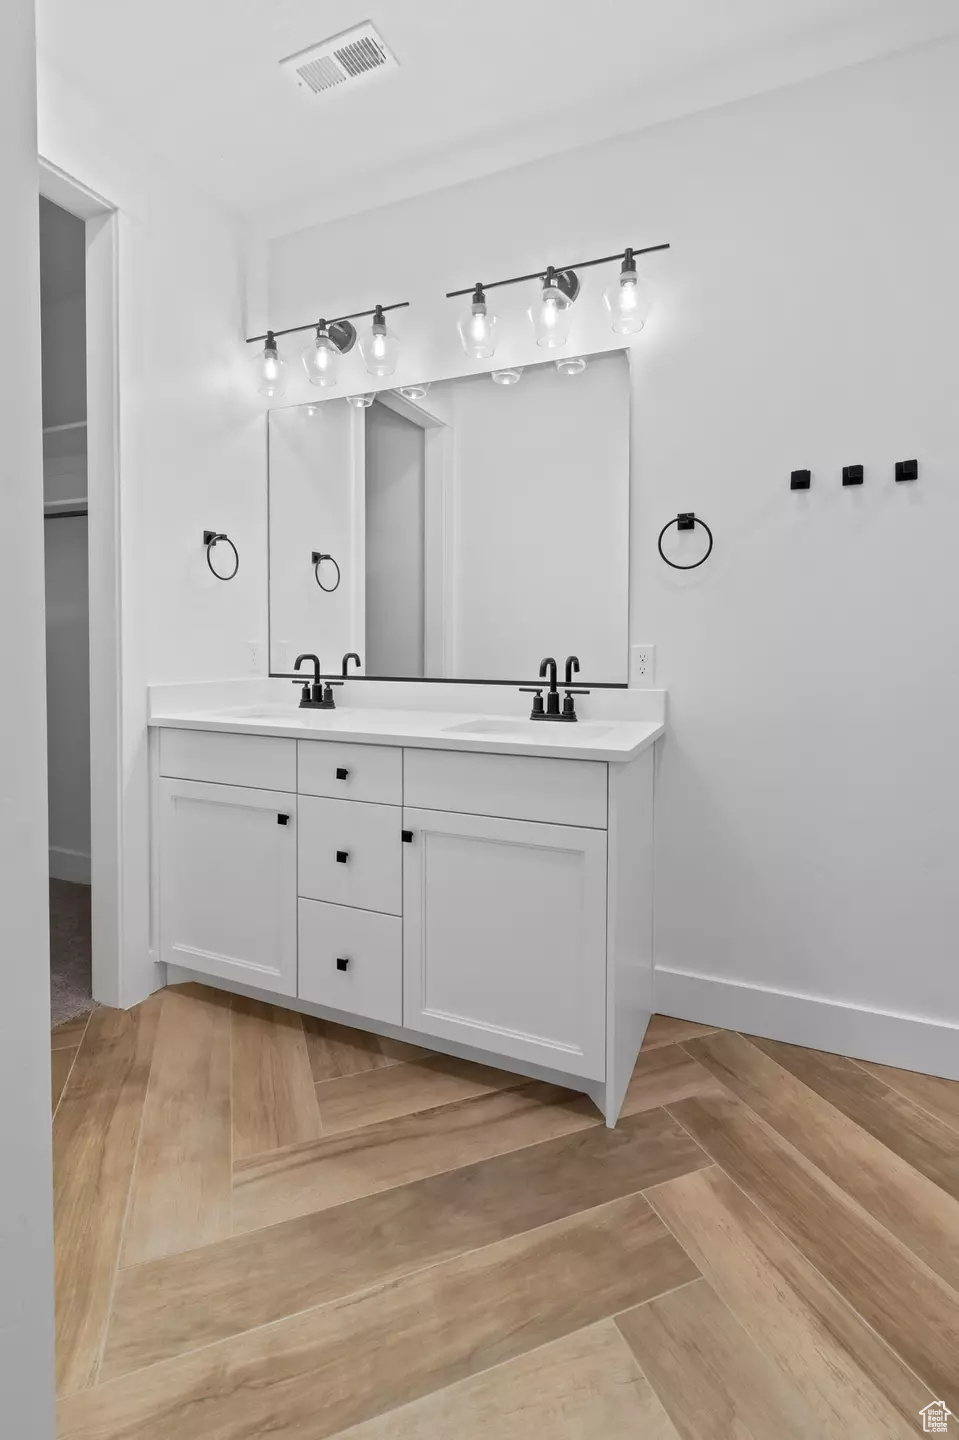 Bathroom featuring dual vanity and parquet floors